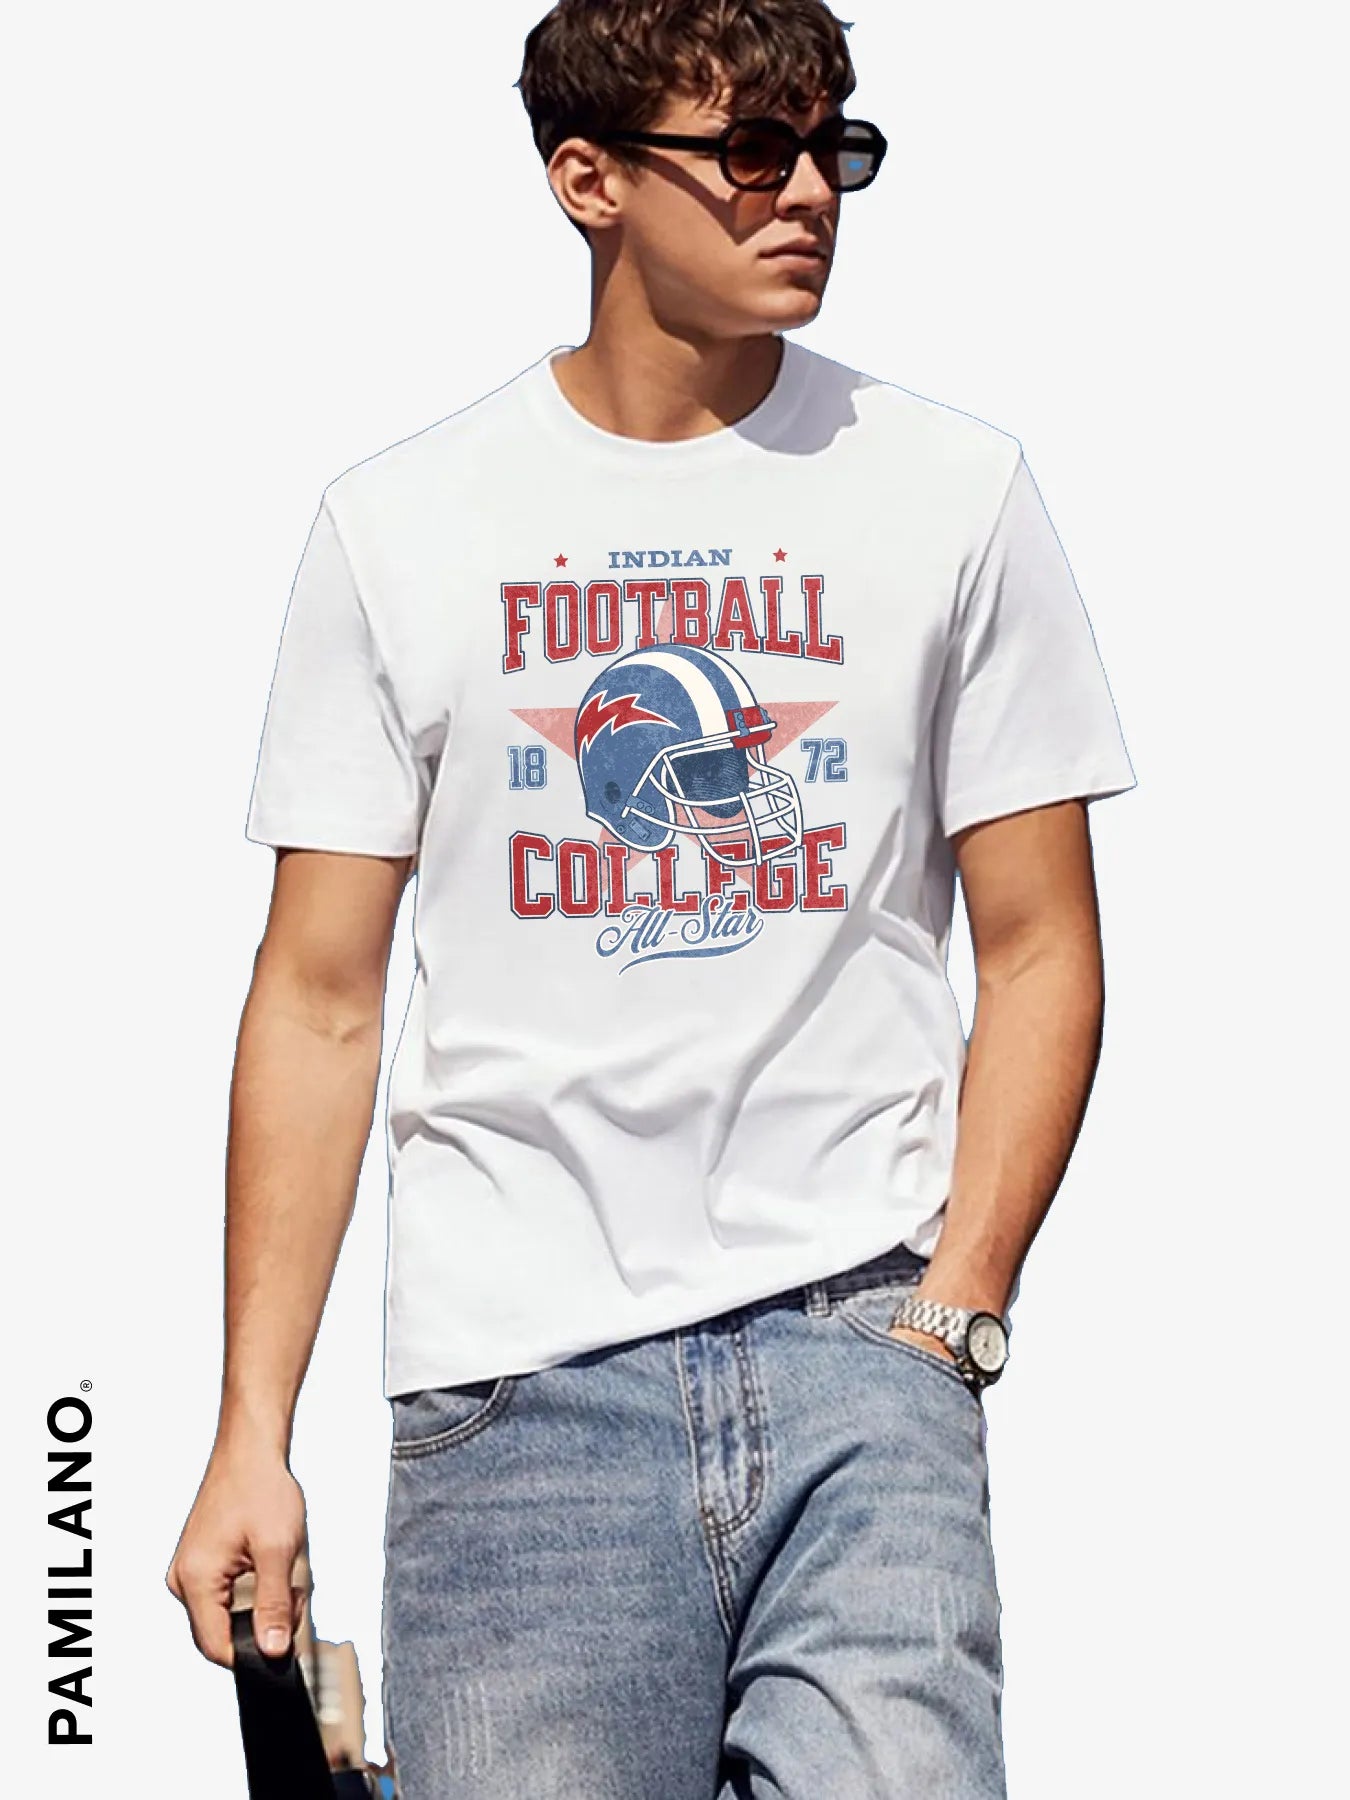 Football IND - Unisex T-Shirt